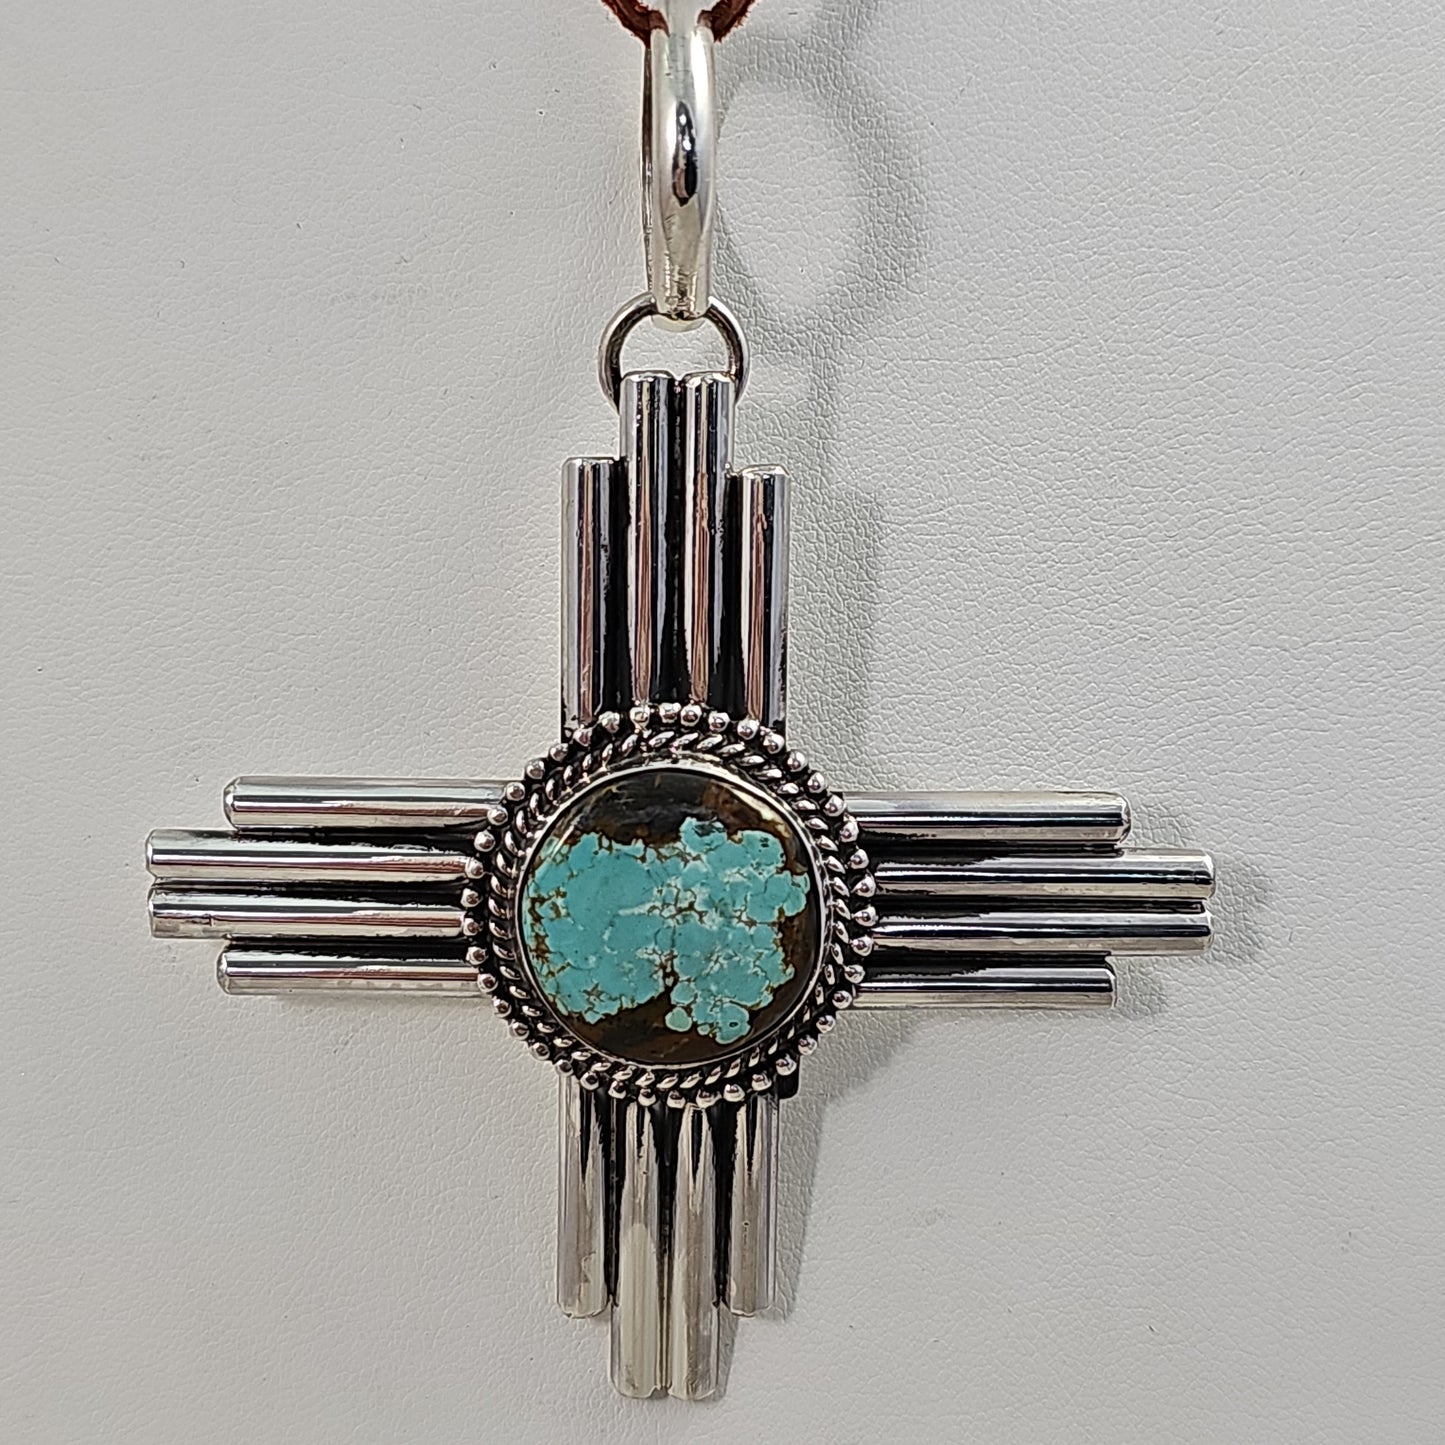 New Mexico Zia pendant